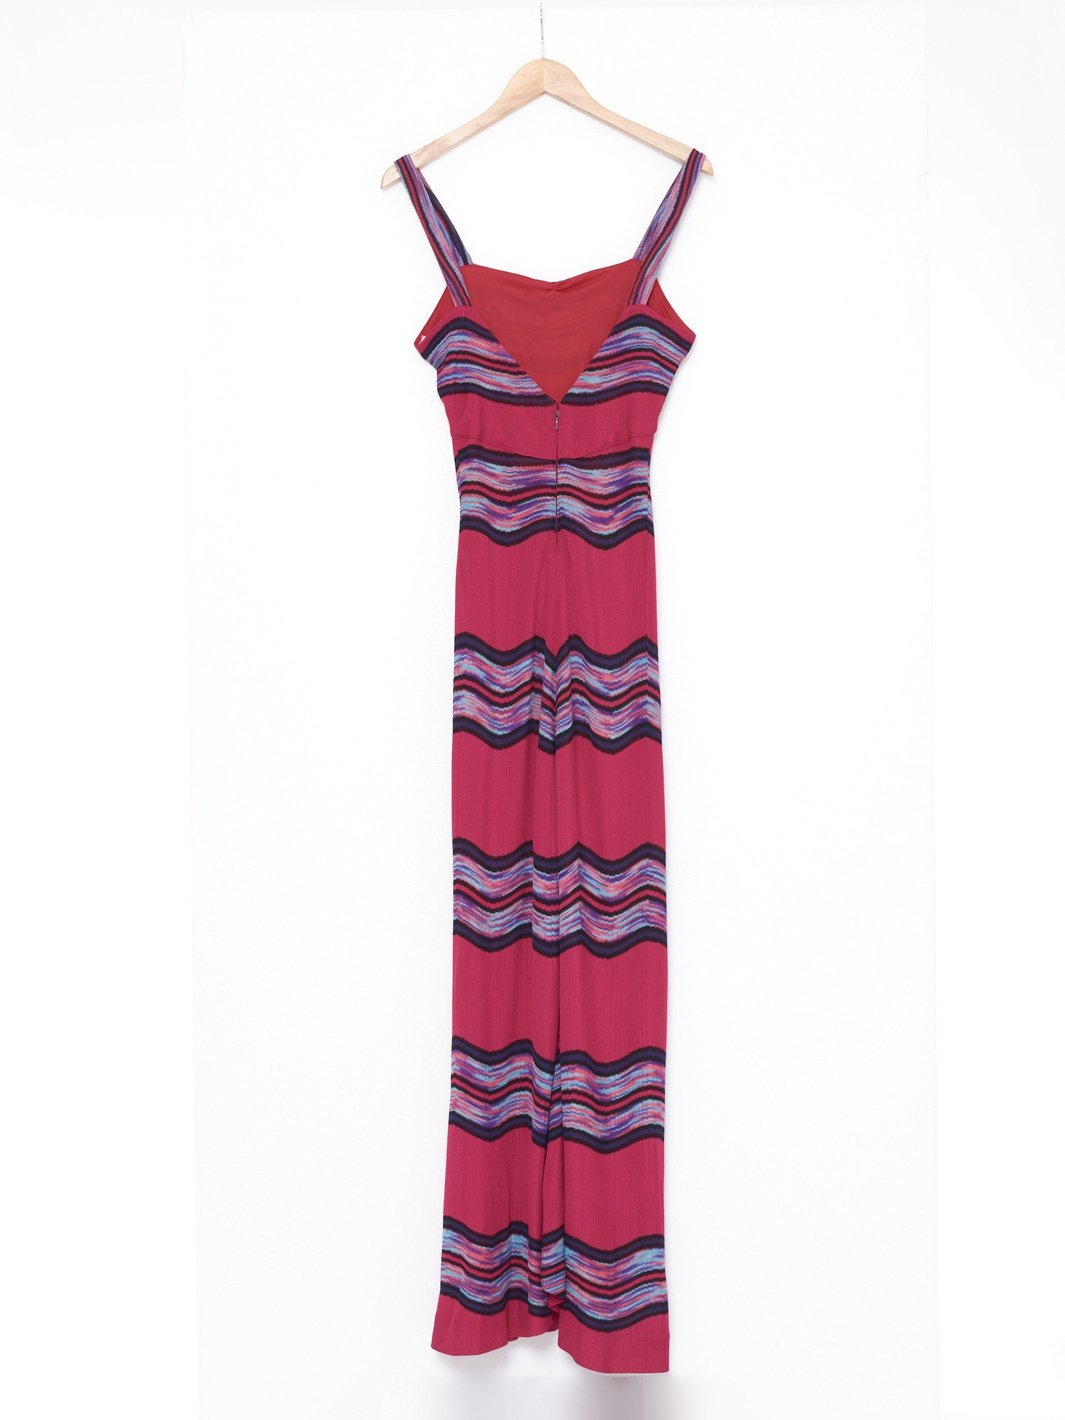 1990s long fuchsia jersey dress with striped pattern